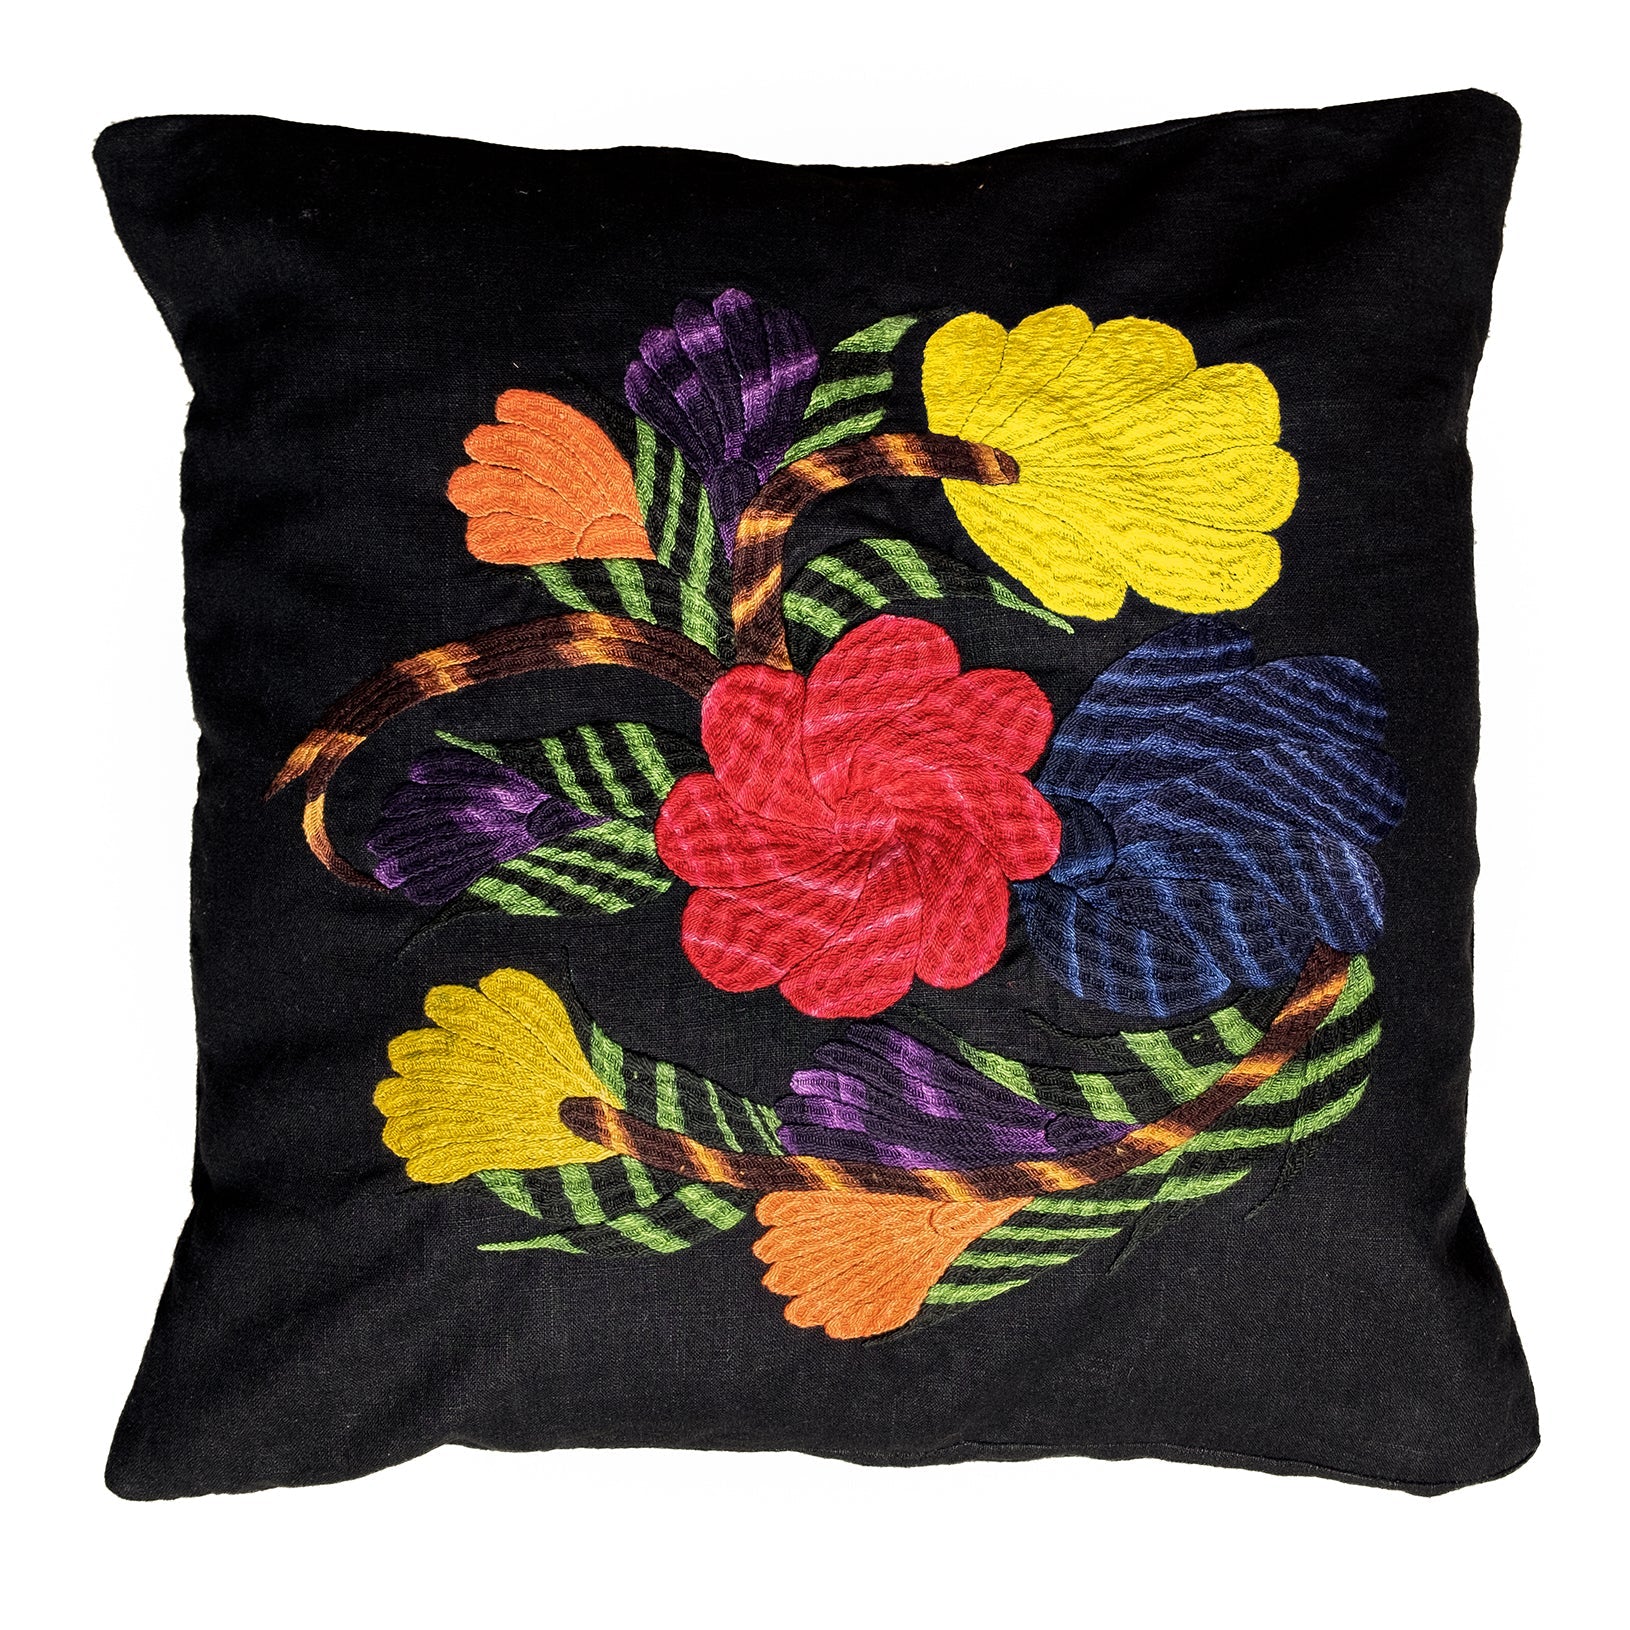 Sale! Flower pillow on black linen